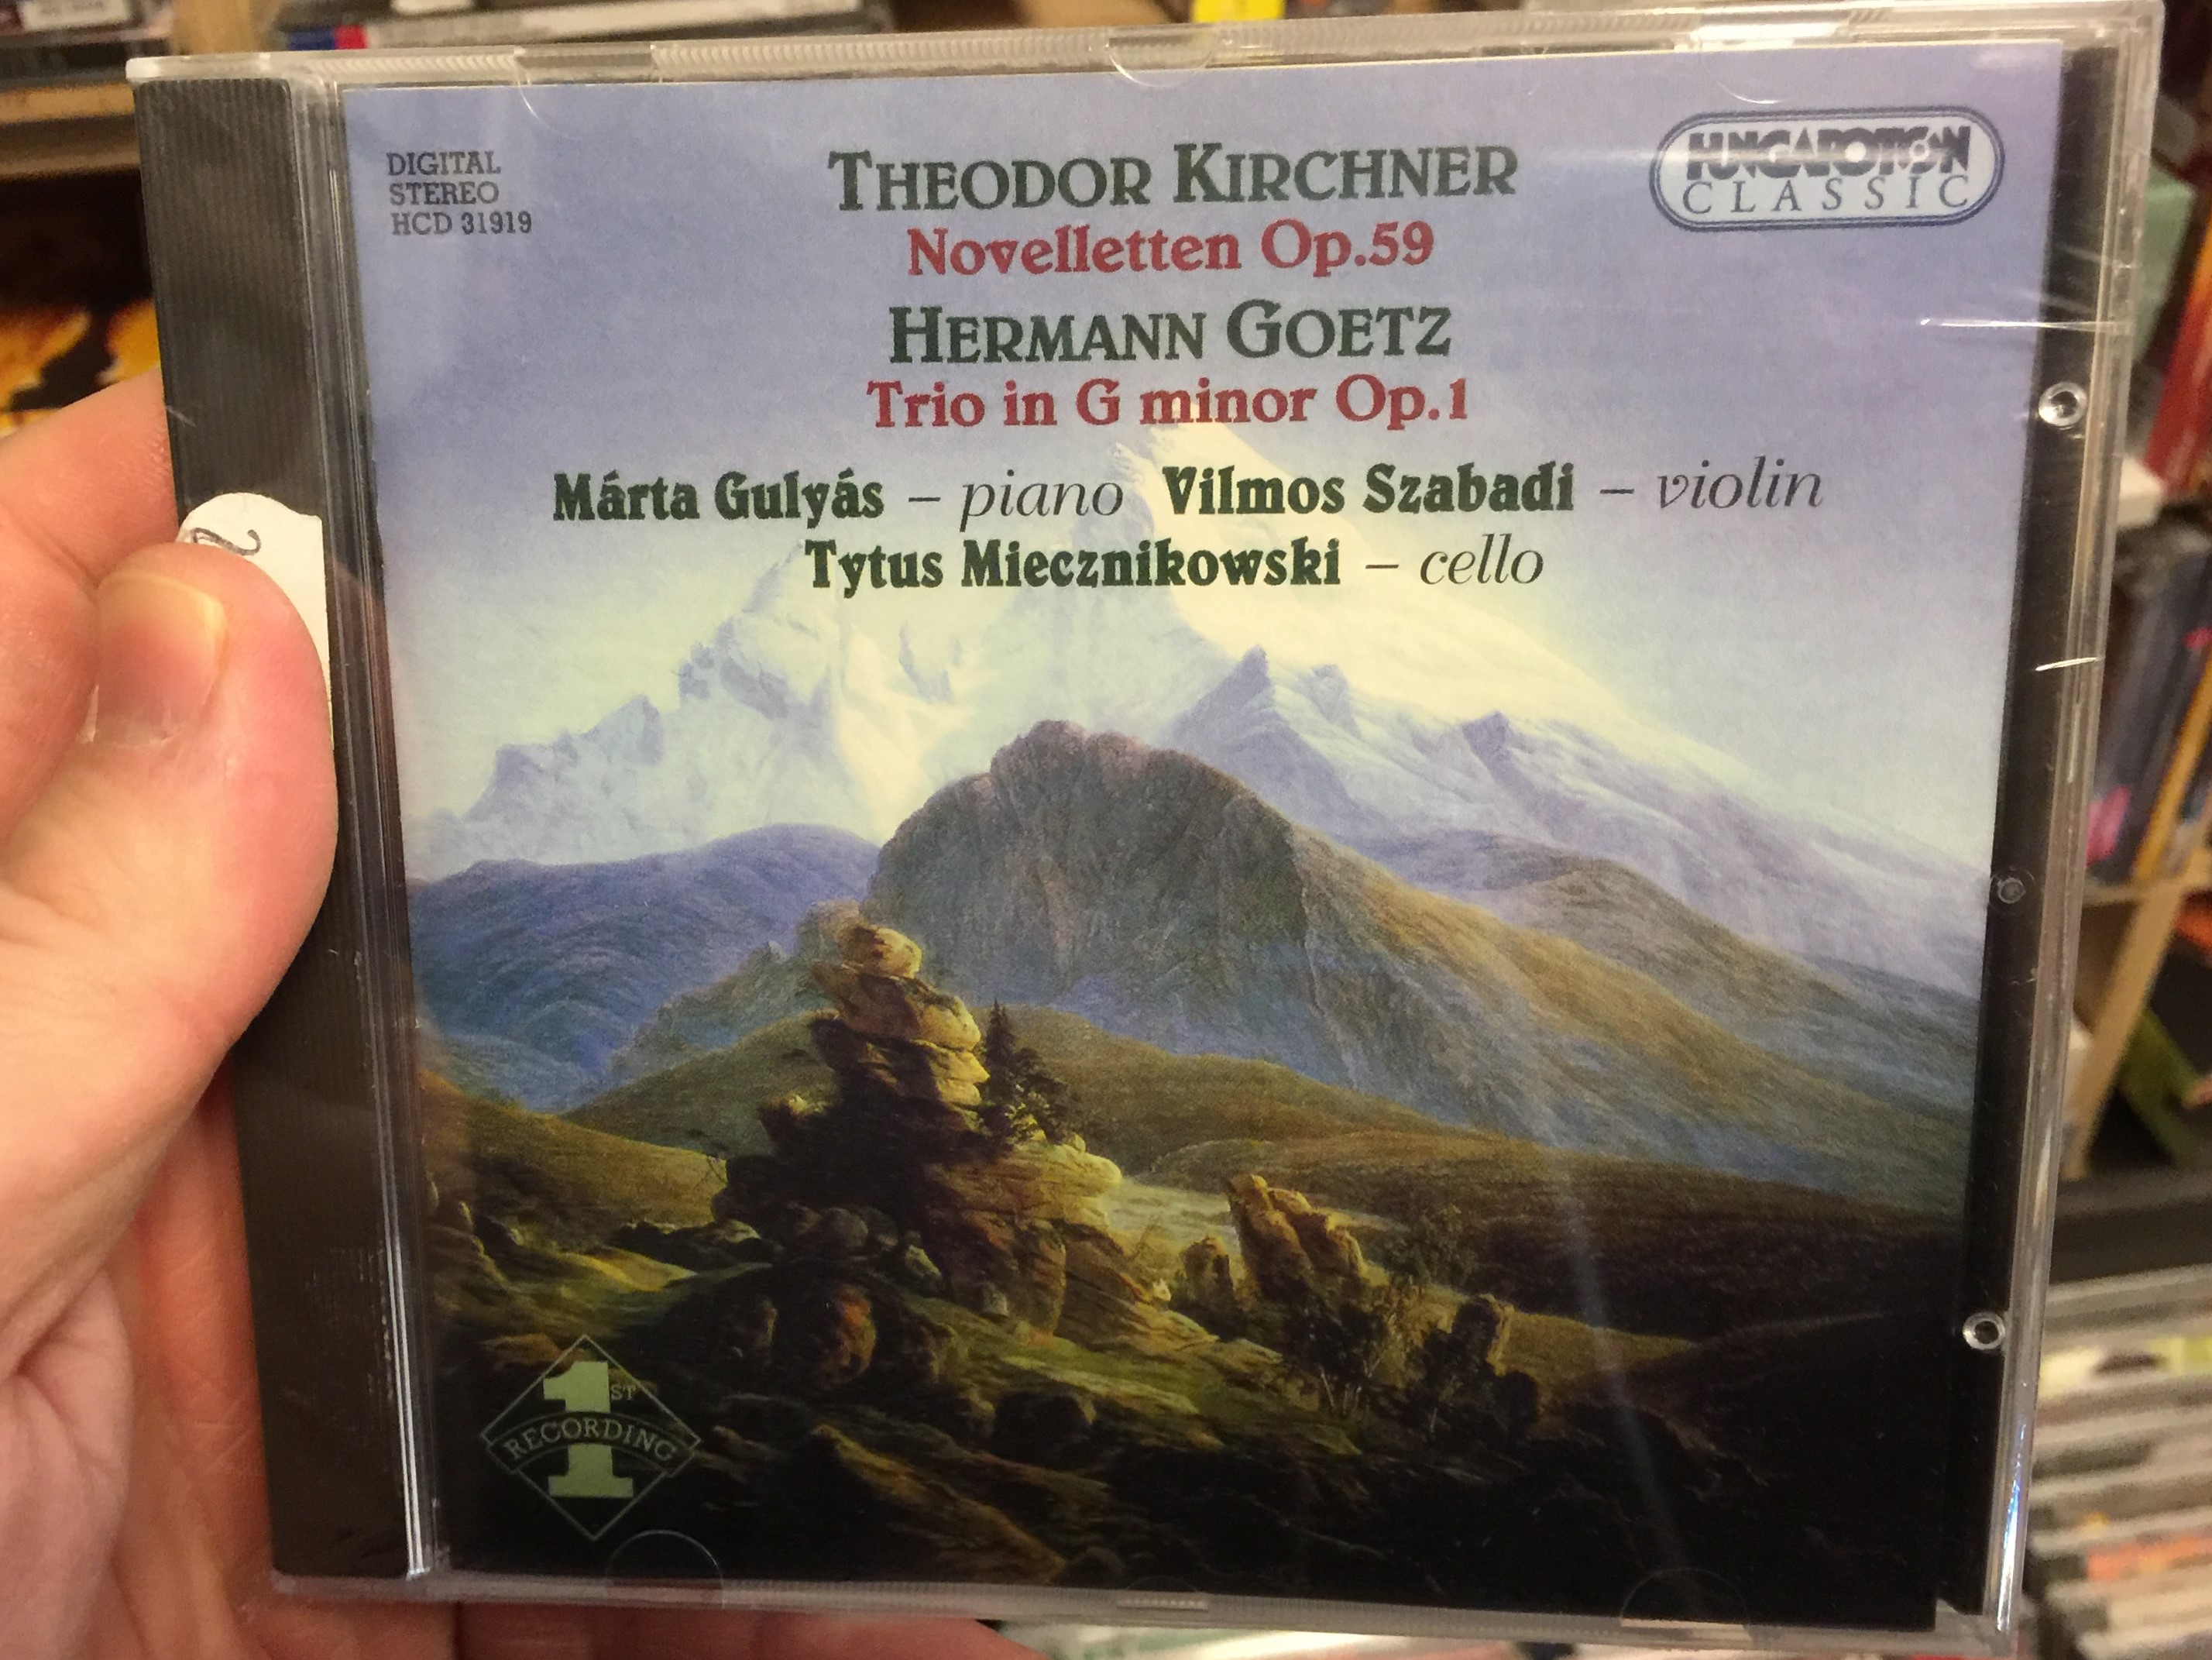 theodor-kirchner-novelletten-op.-59-hermann-goetz-trio-in-g-minor-op.-1-marta-gulyas-piano-vilmos-szabadi-violin-tytus-miecznikowski-cello-hungaroton-classic-audio-cd-2000-stereo-h-1-.jpg